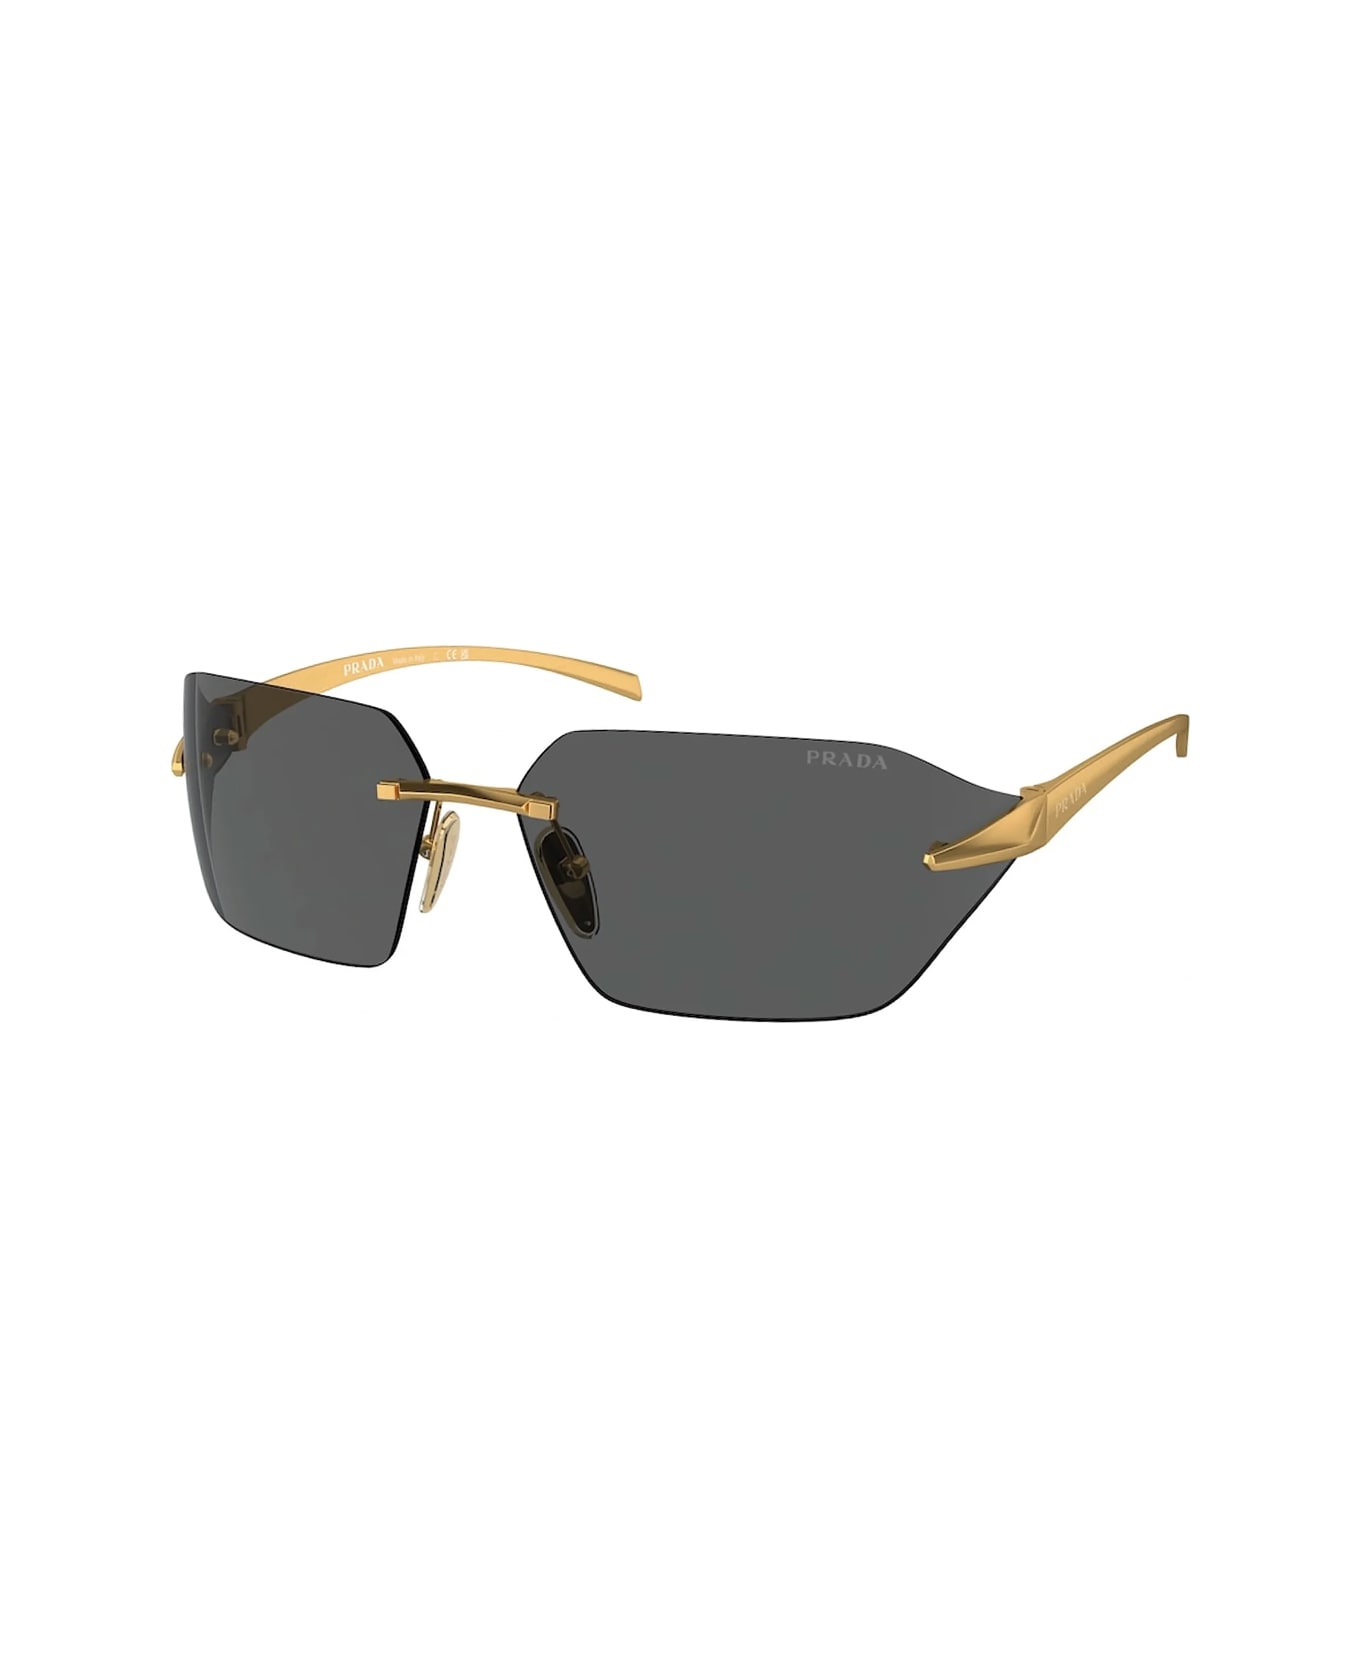 Prada Eyewear Pra56s 15n5s0 Sunglasses Retrosuperfuture - Oro